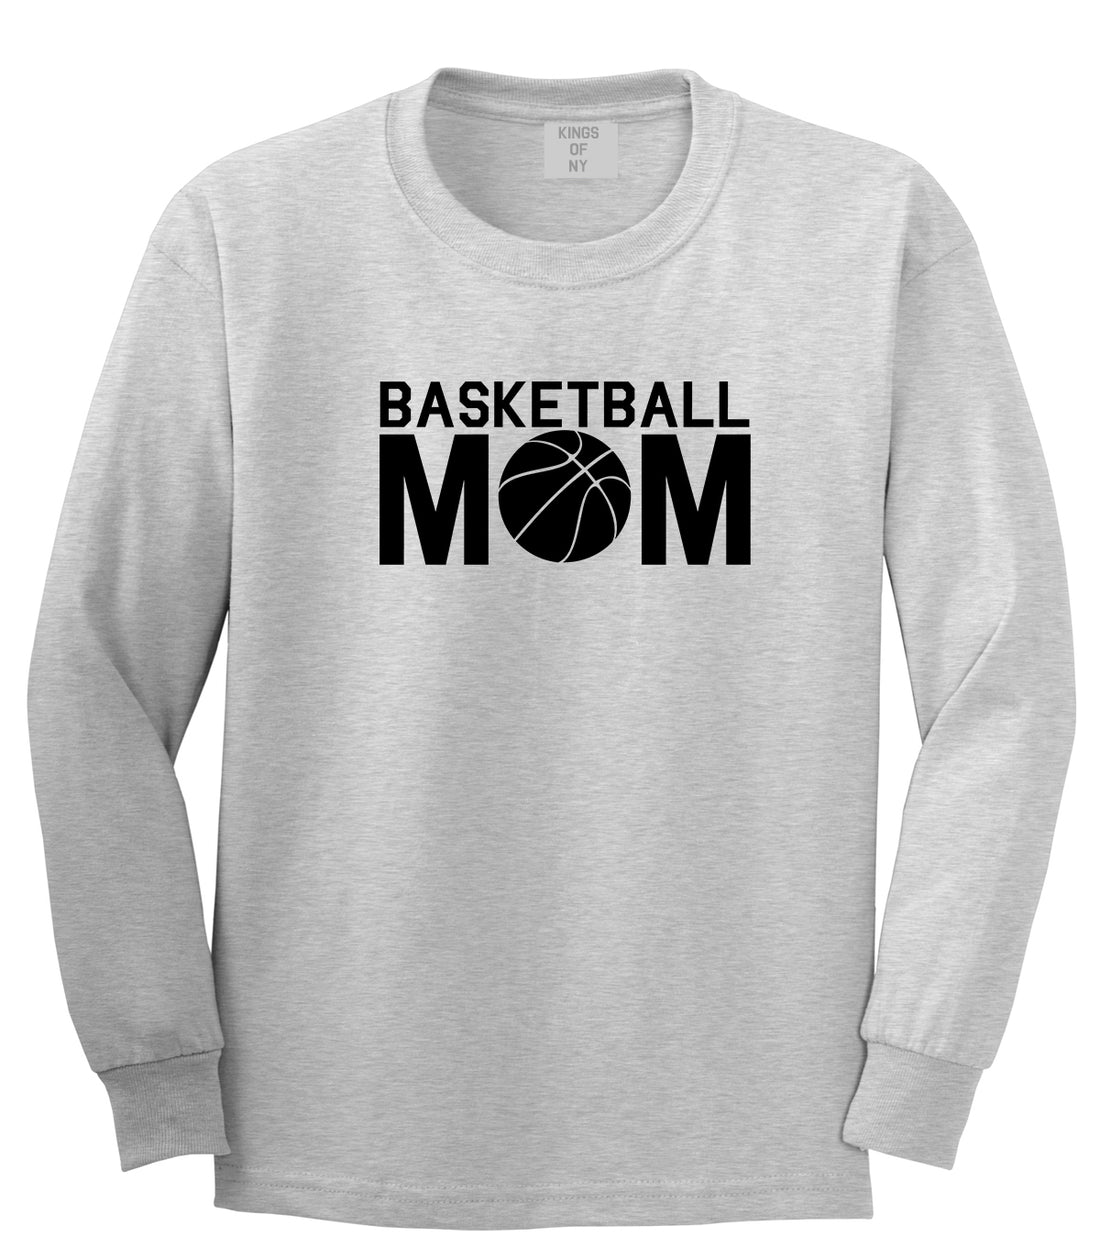 Basketball Mom Grey Long Sleeve T-Shirt by Kings Of NY